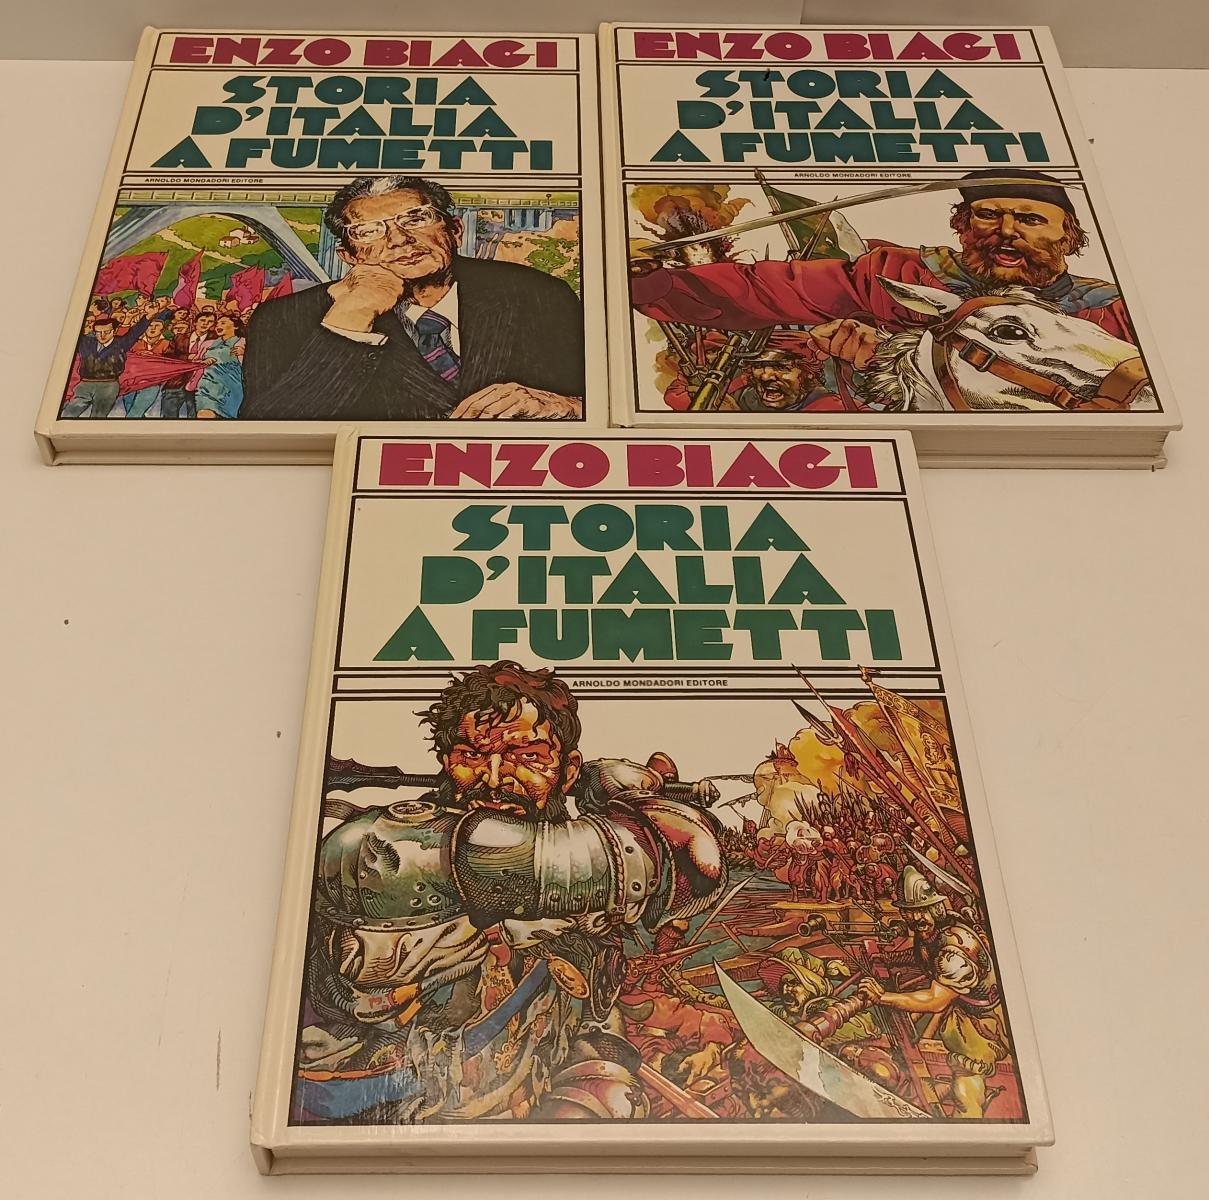 FV- STORIA DI ROMA A FUMETTI - ENZO BIAGI - MONDADORI - 1986 - C - D24